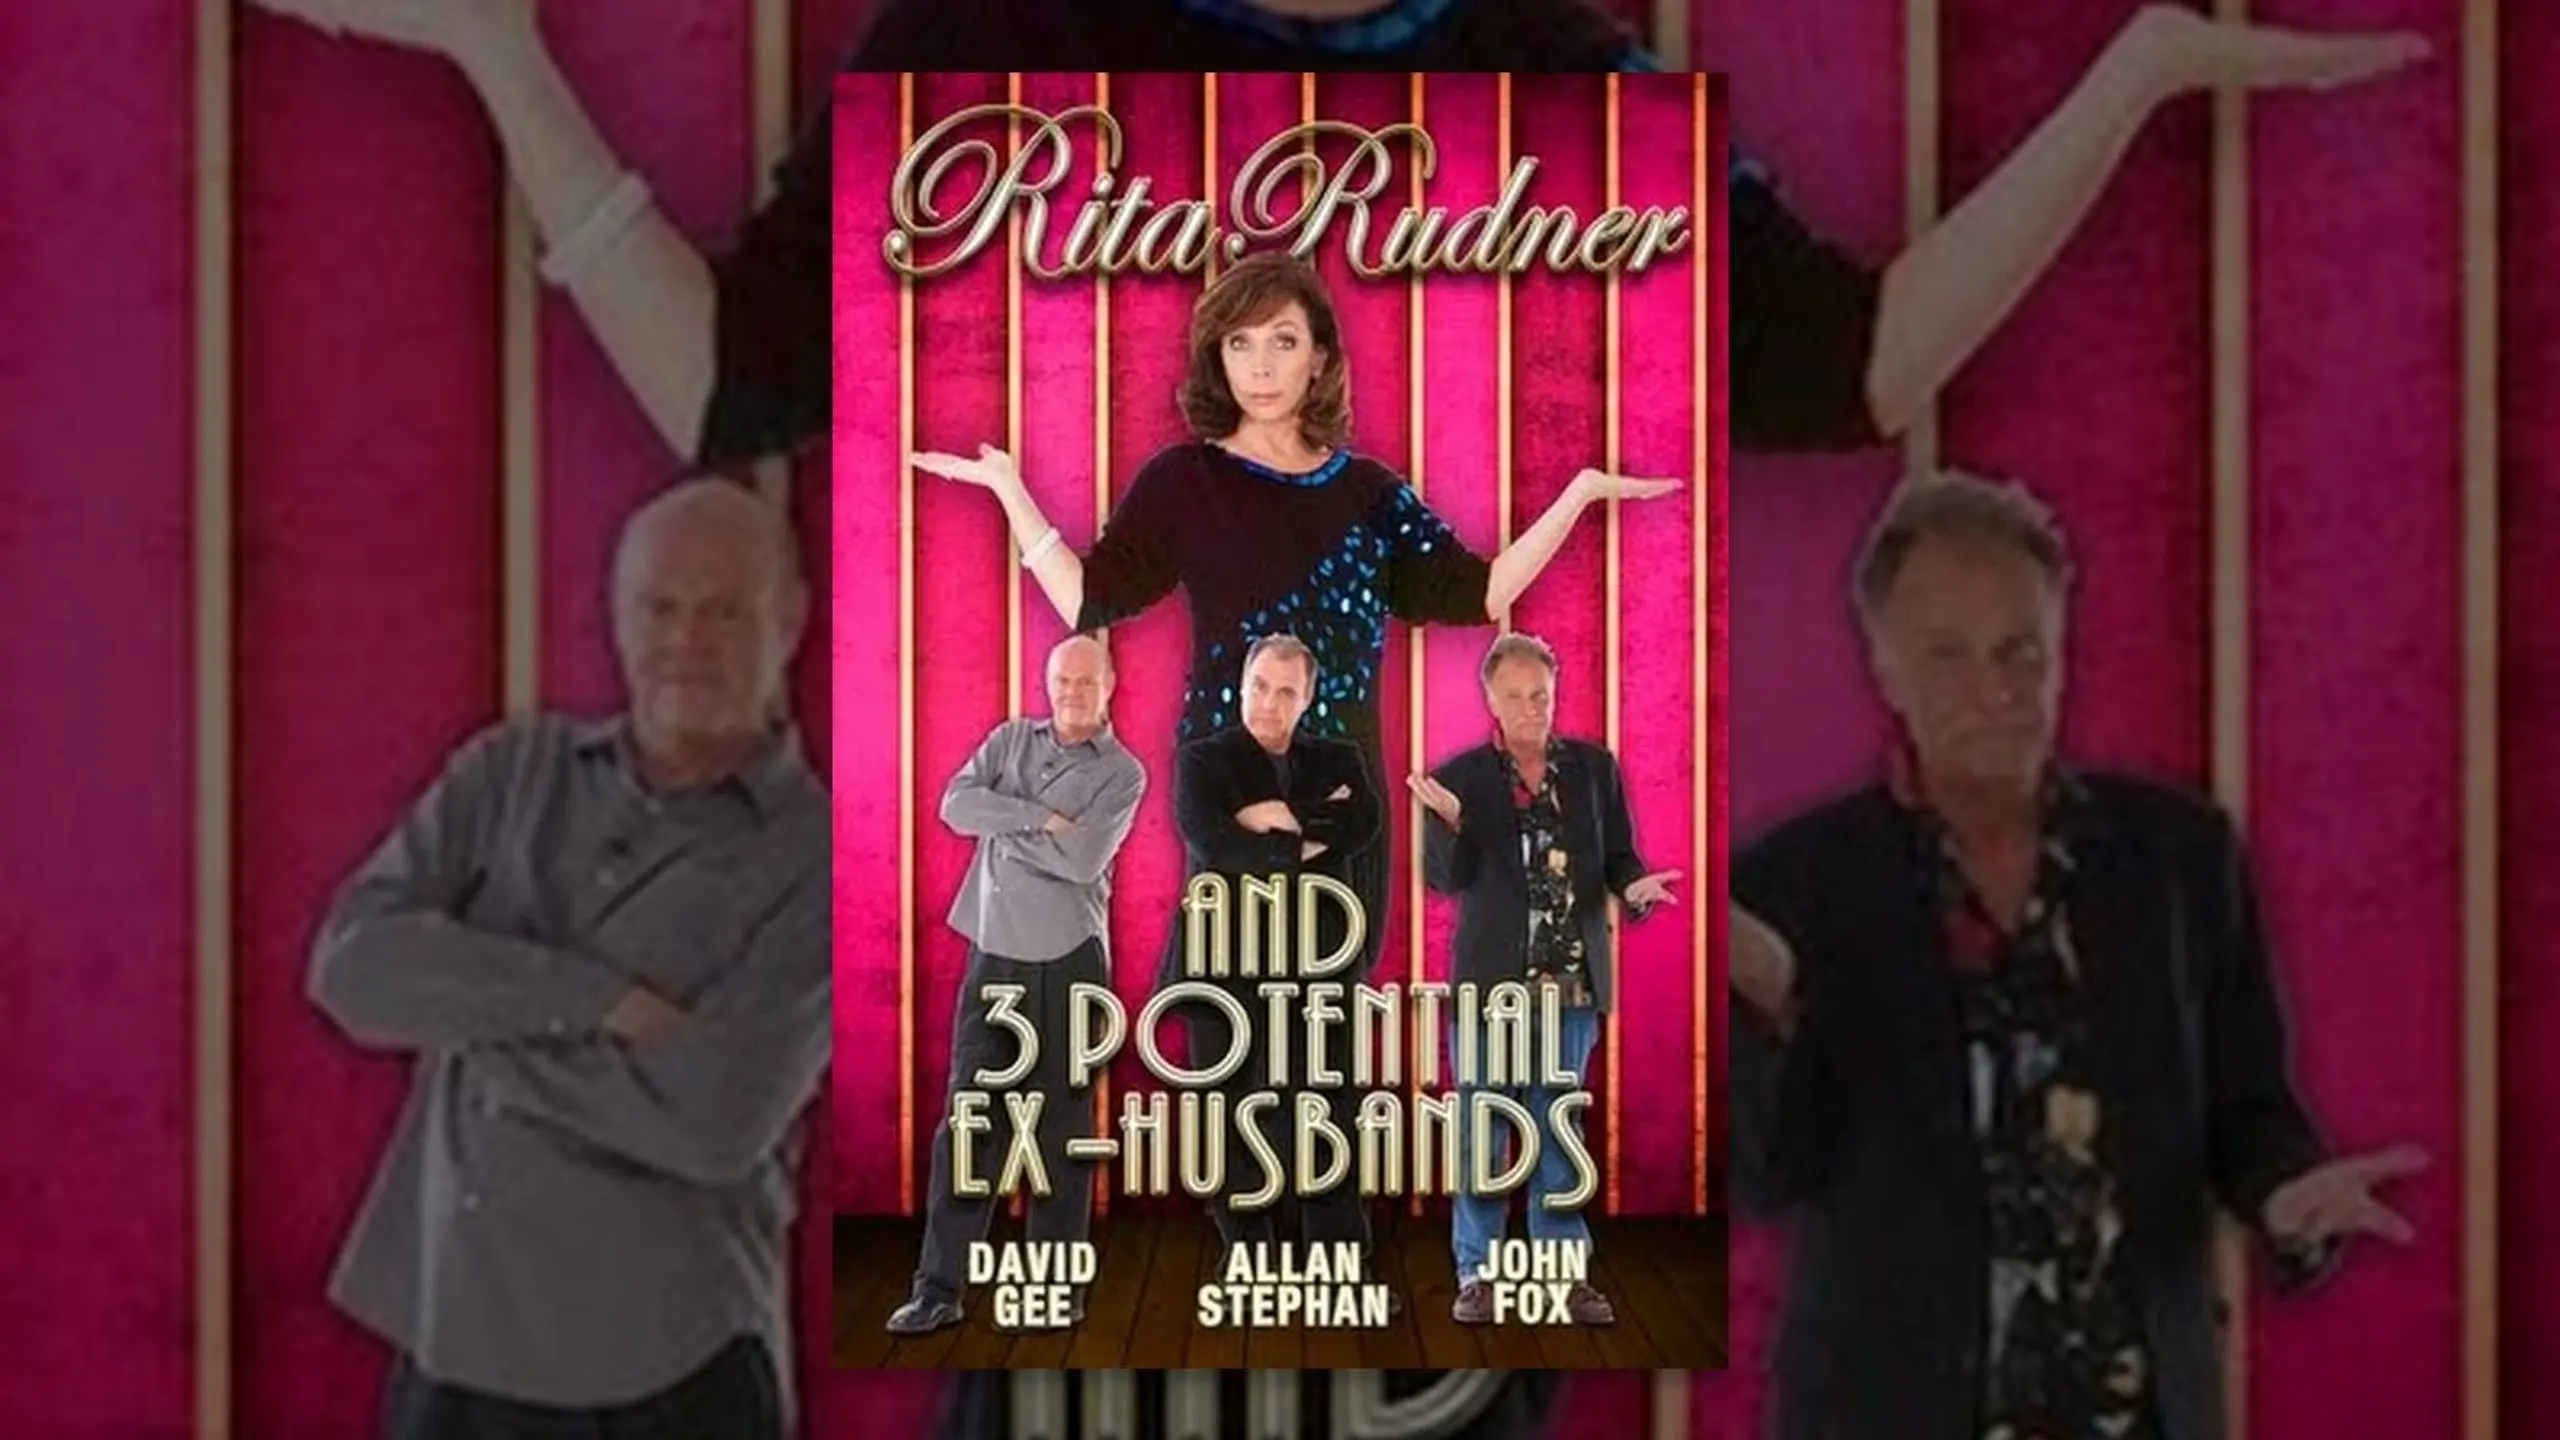 Rita Rudner and 3 Potential Ex-Husbands